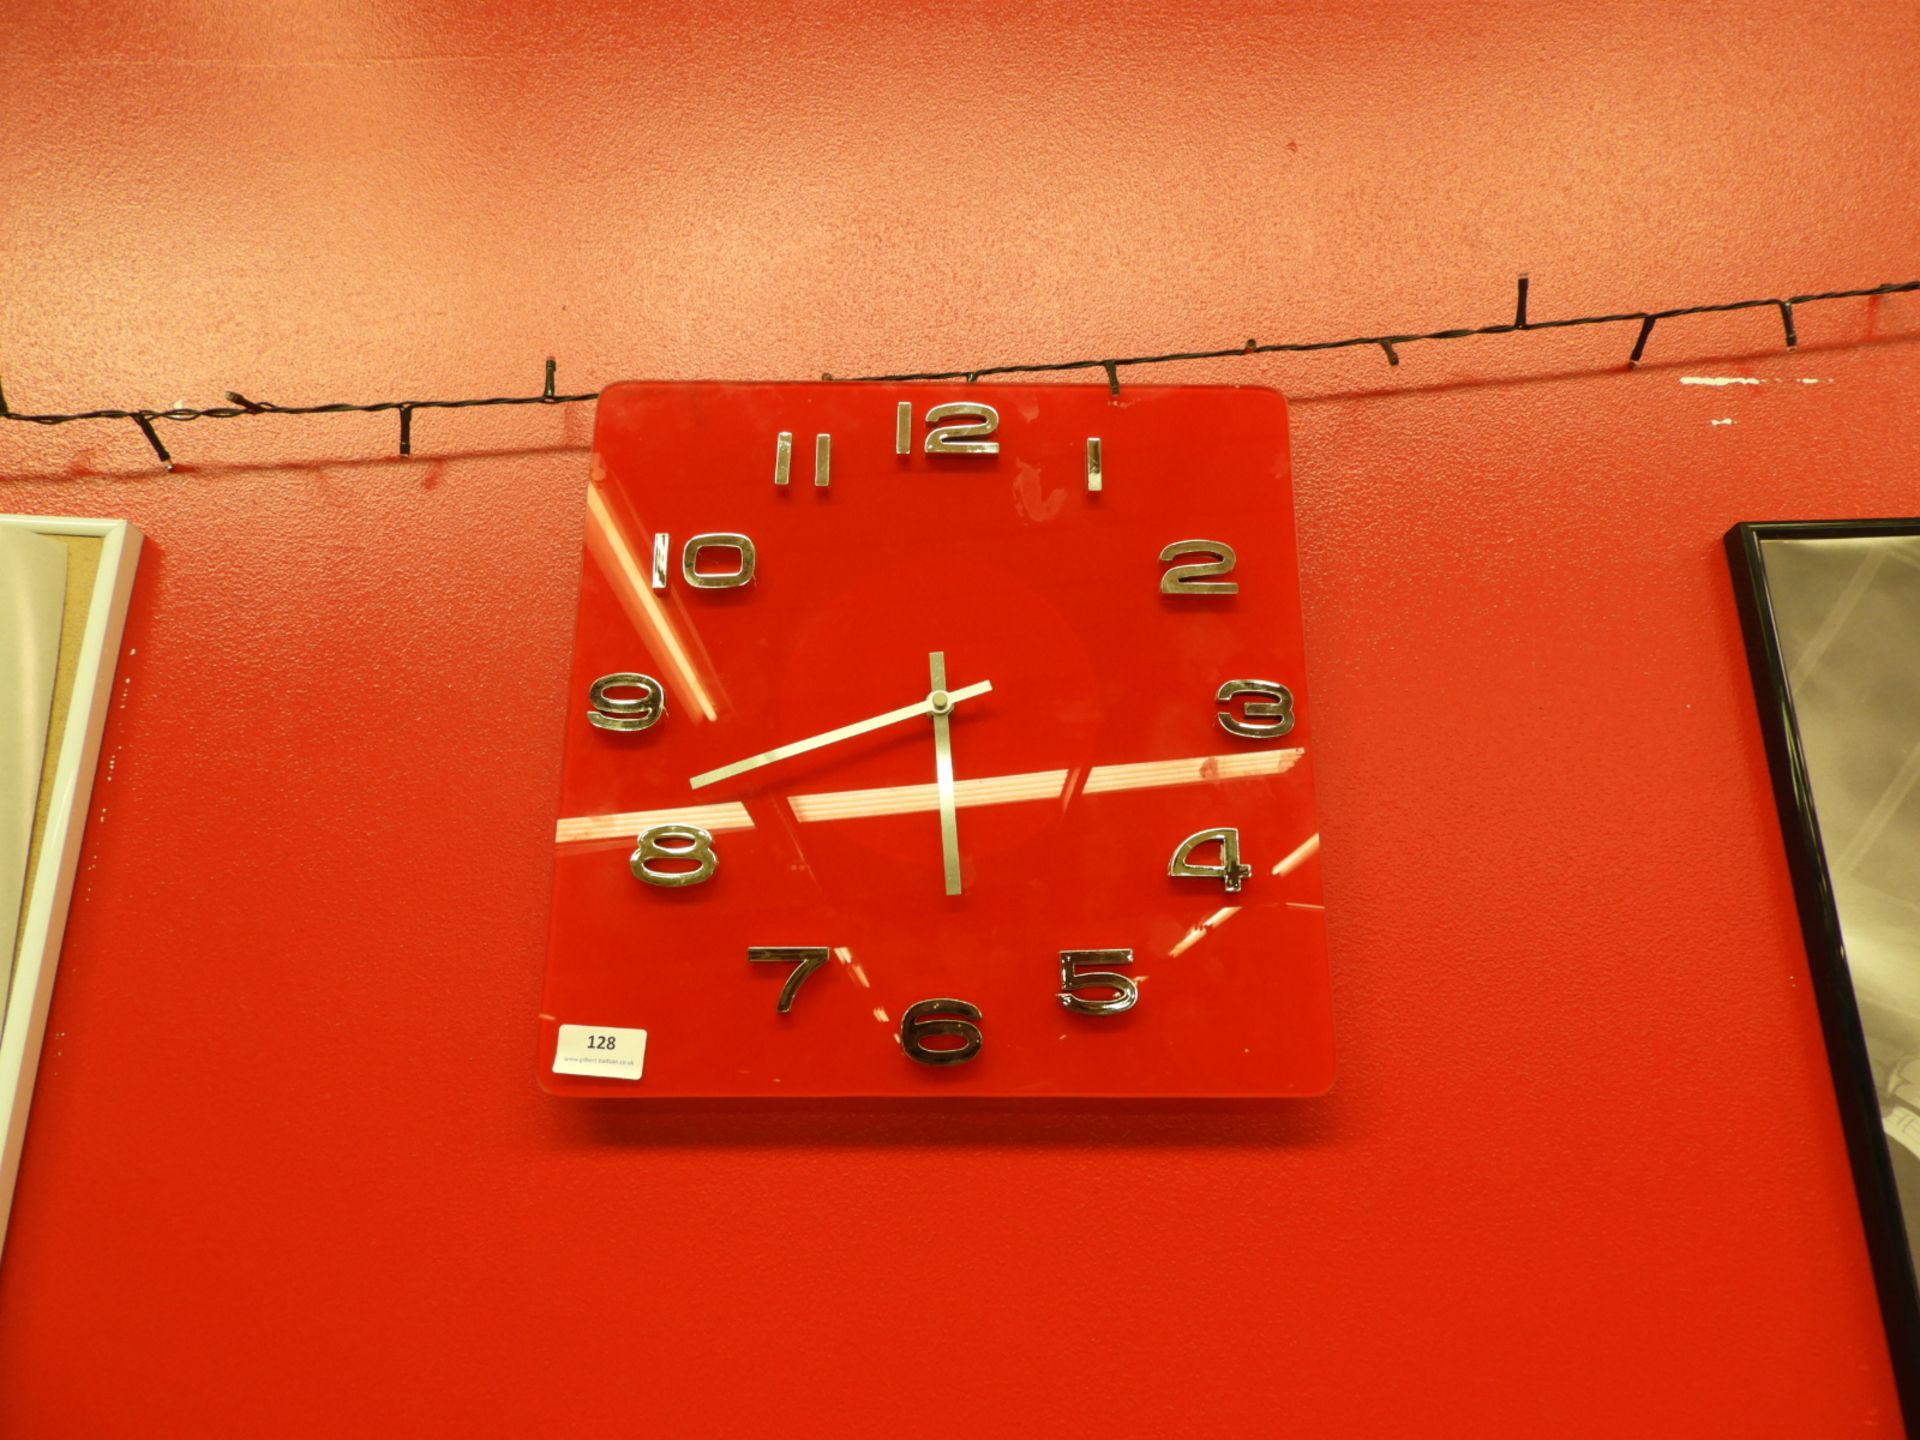 *Red Square Clock